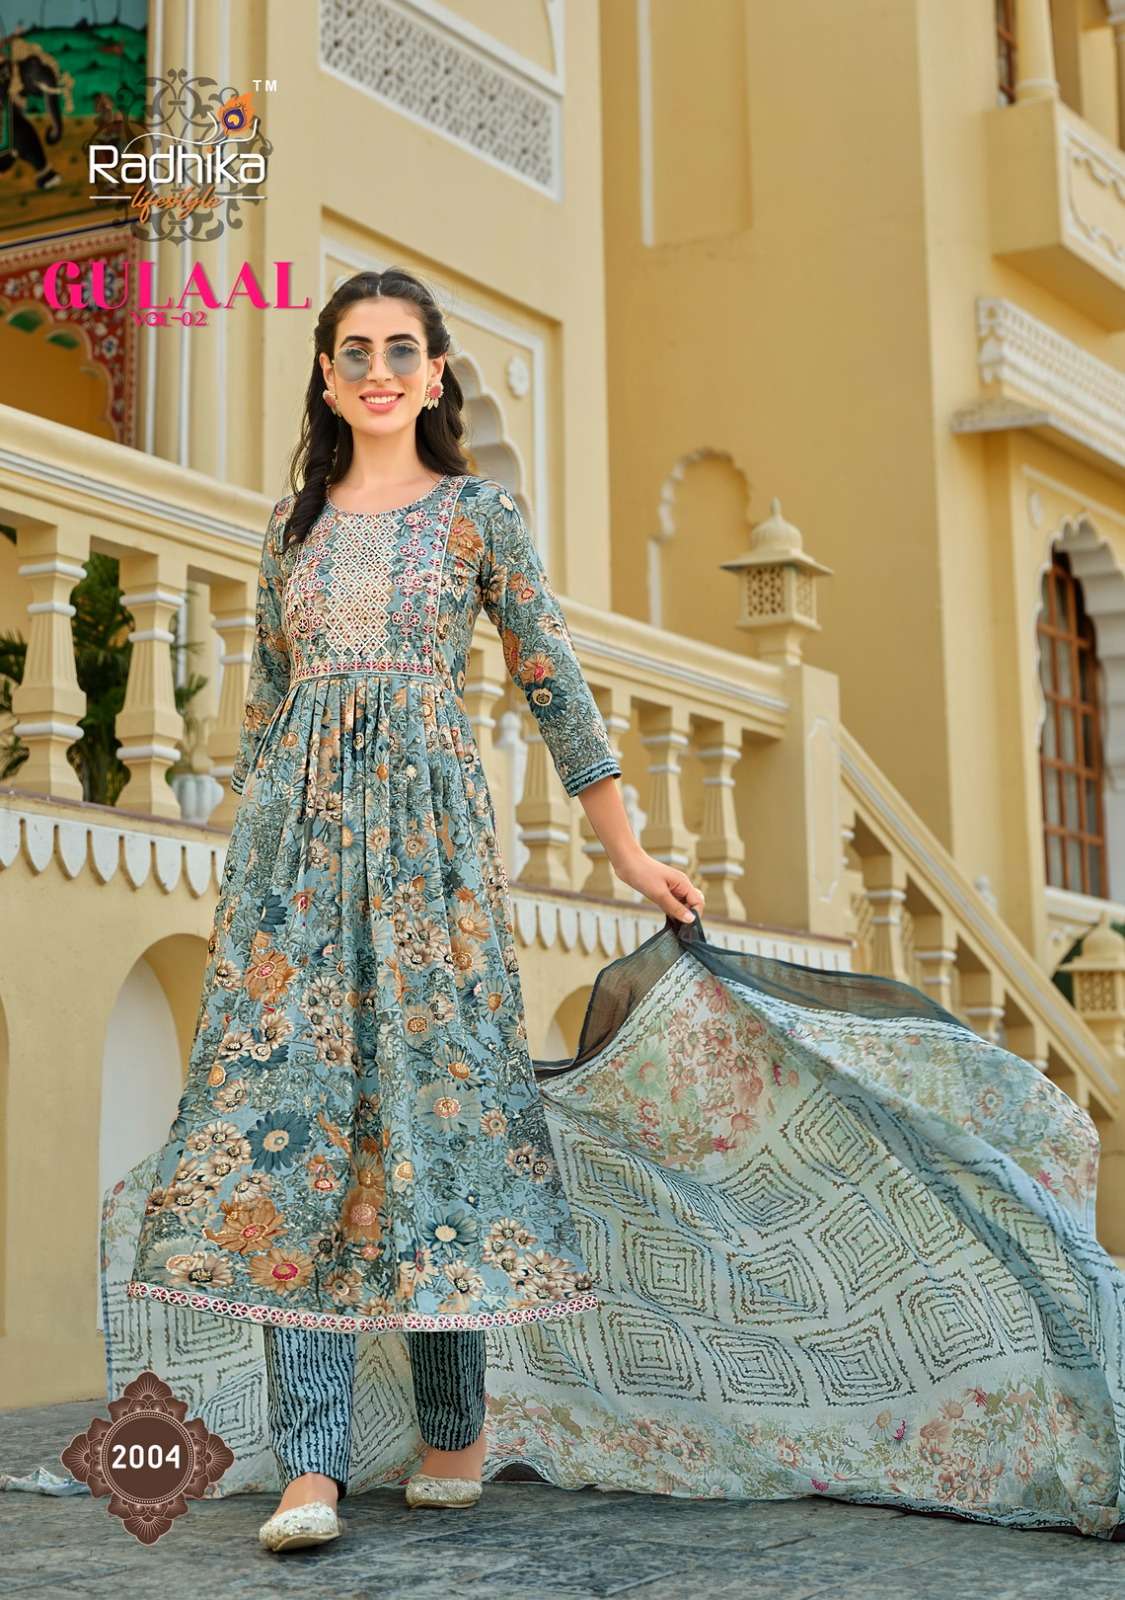 Gulaal Vol 2 Buy Radhika Lifestyle Online Wholesaler Latest Collection Kurta Suit Set